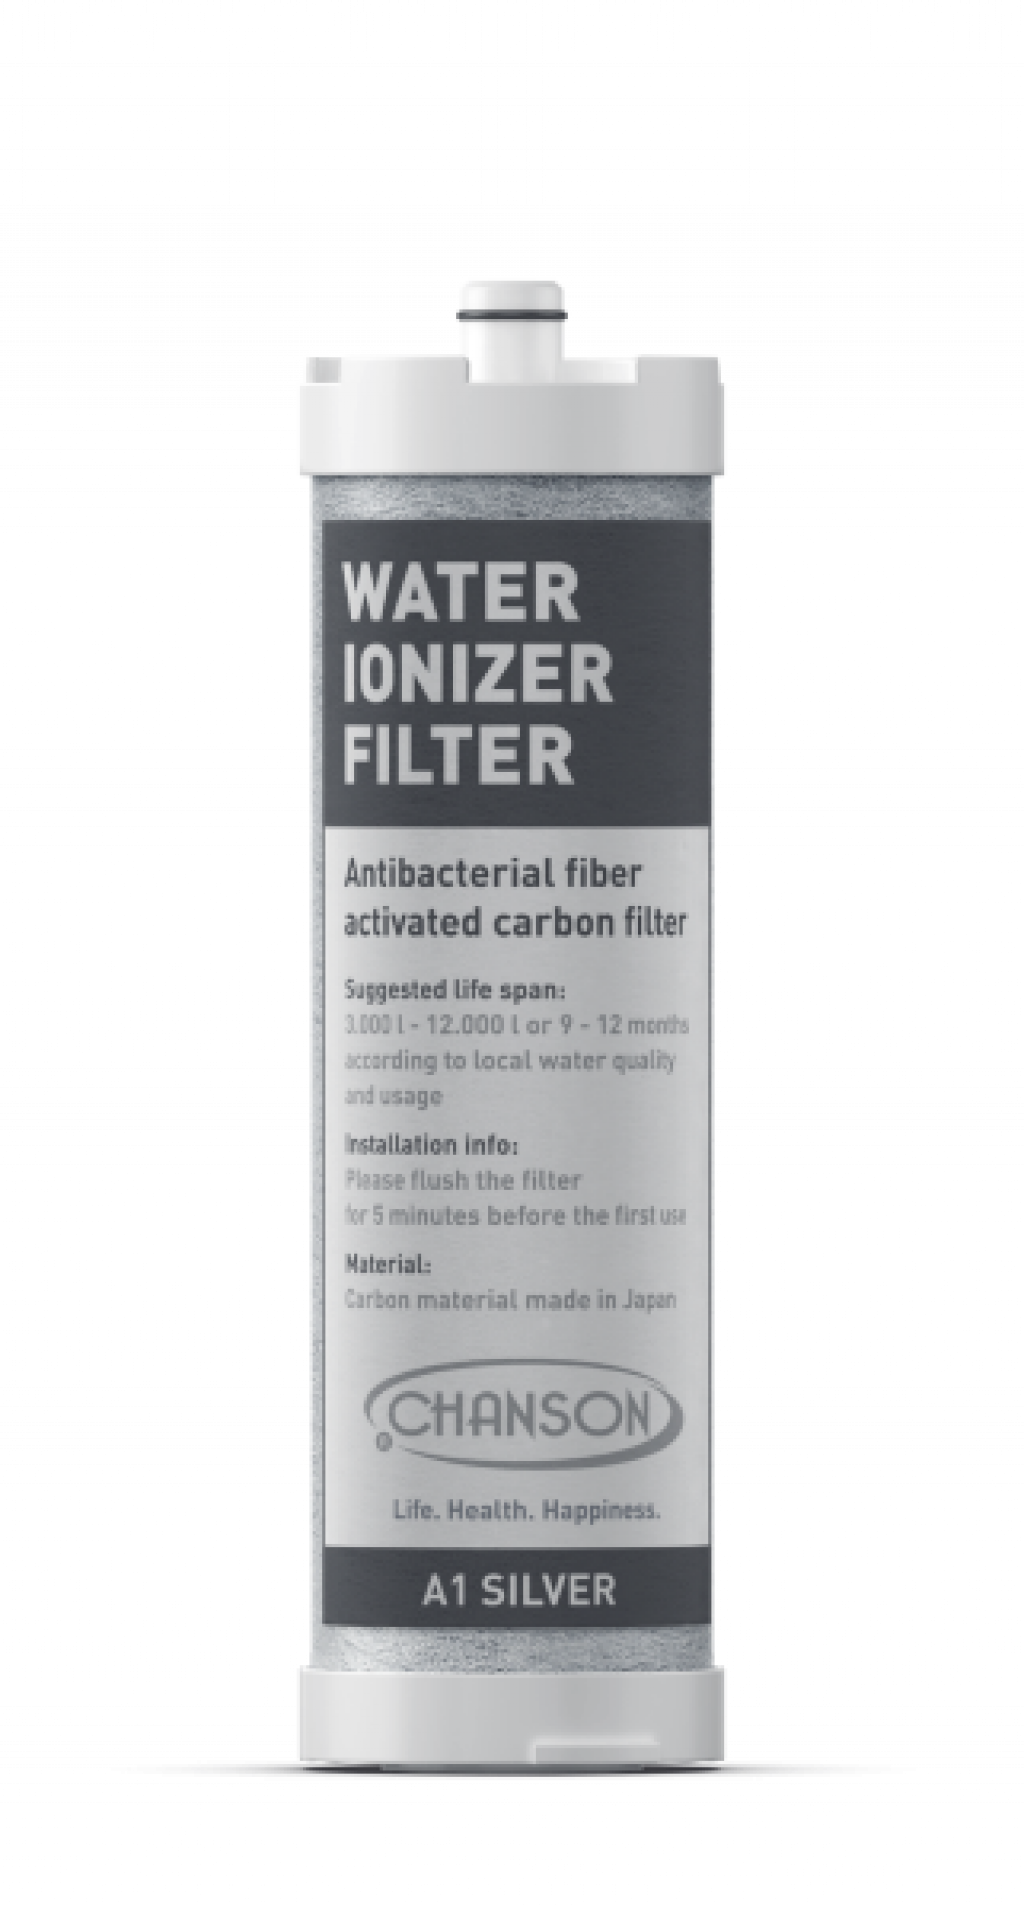 Filtr pro ionizátory Chanson